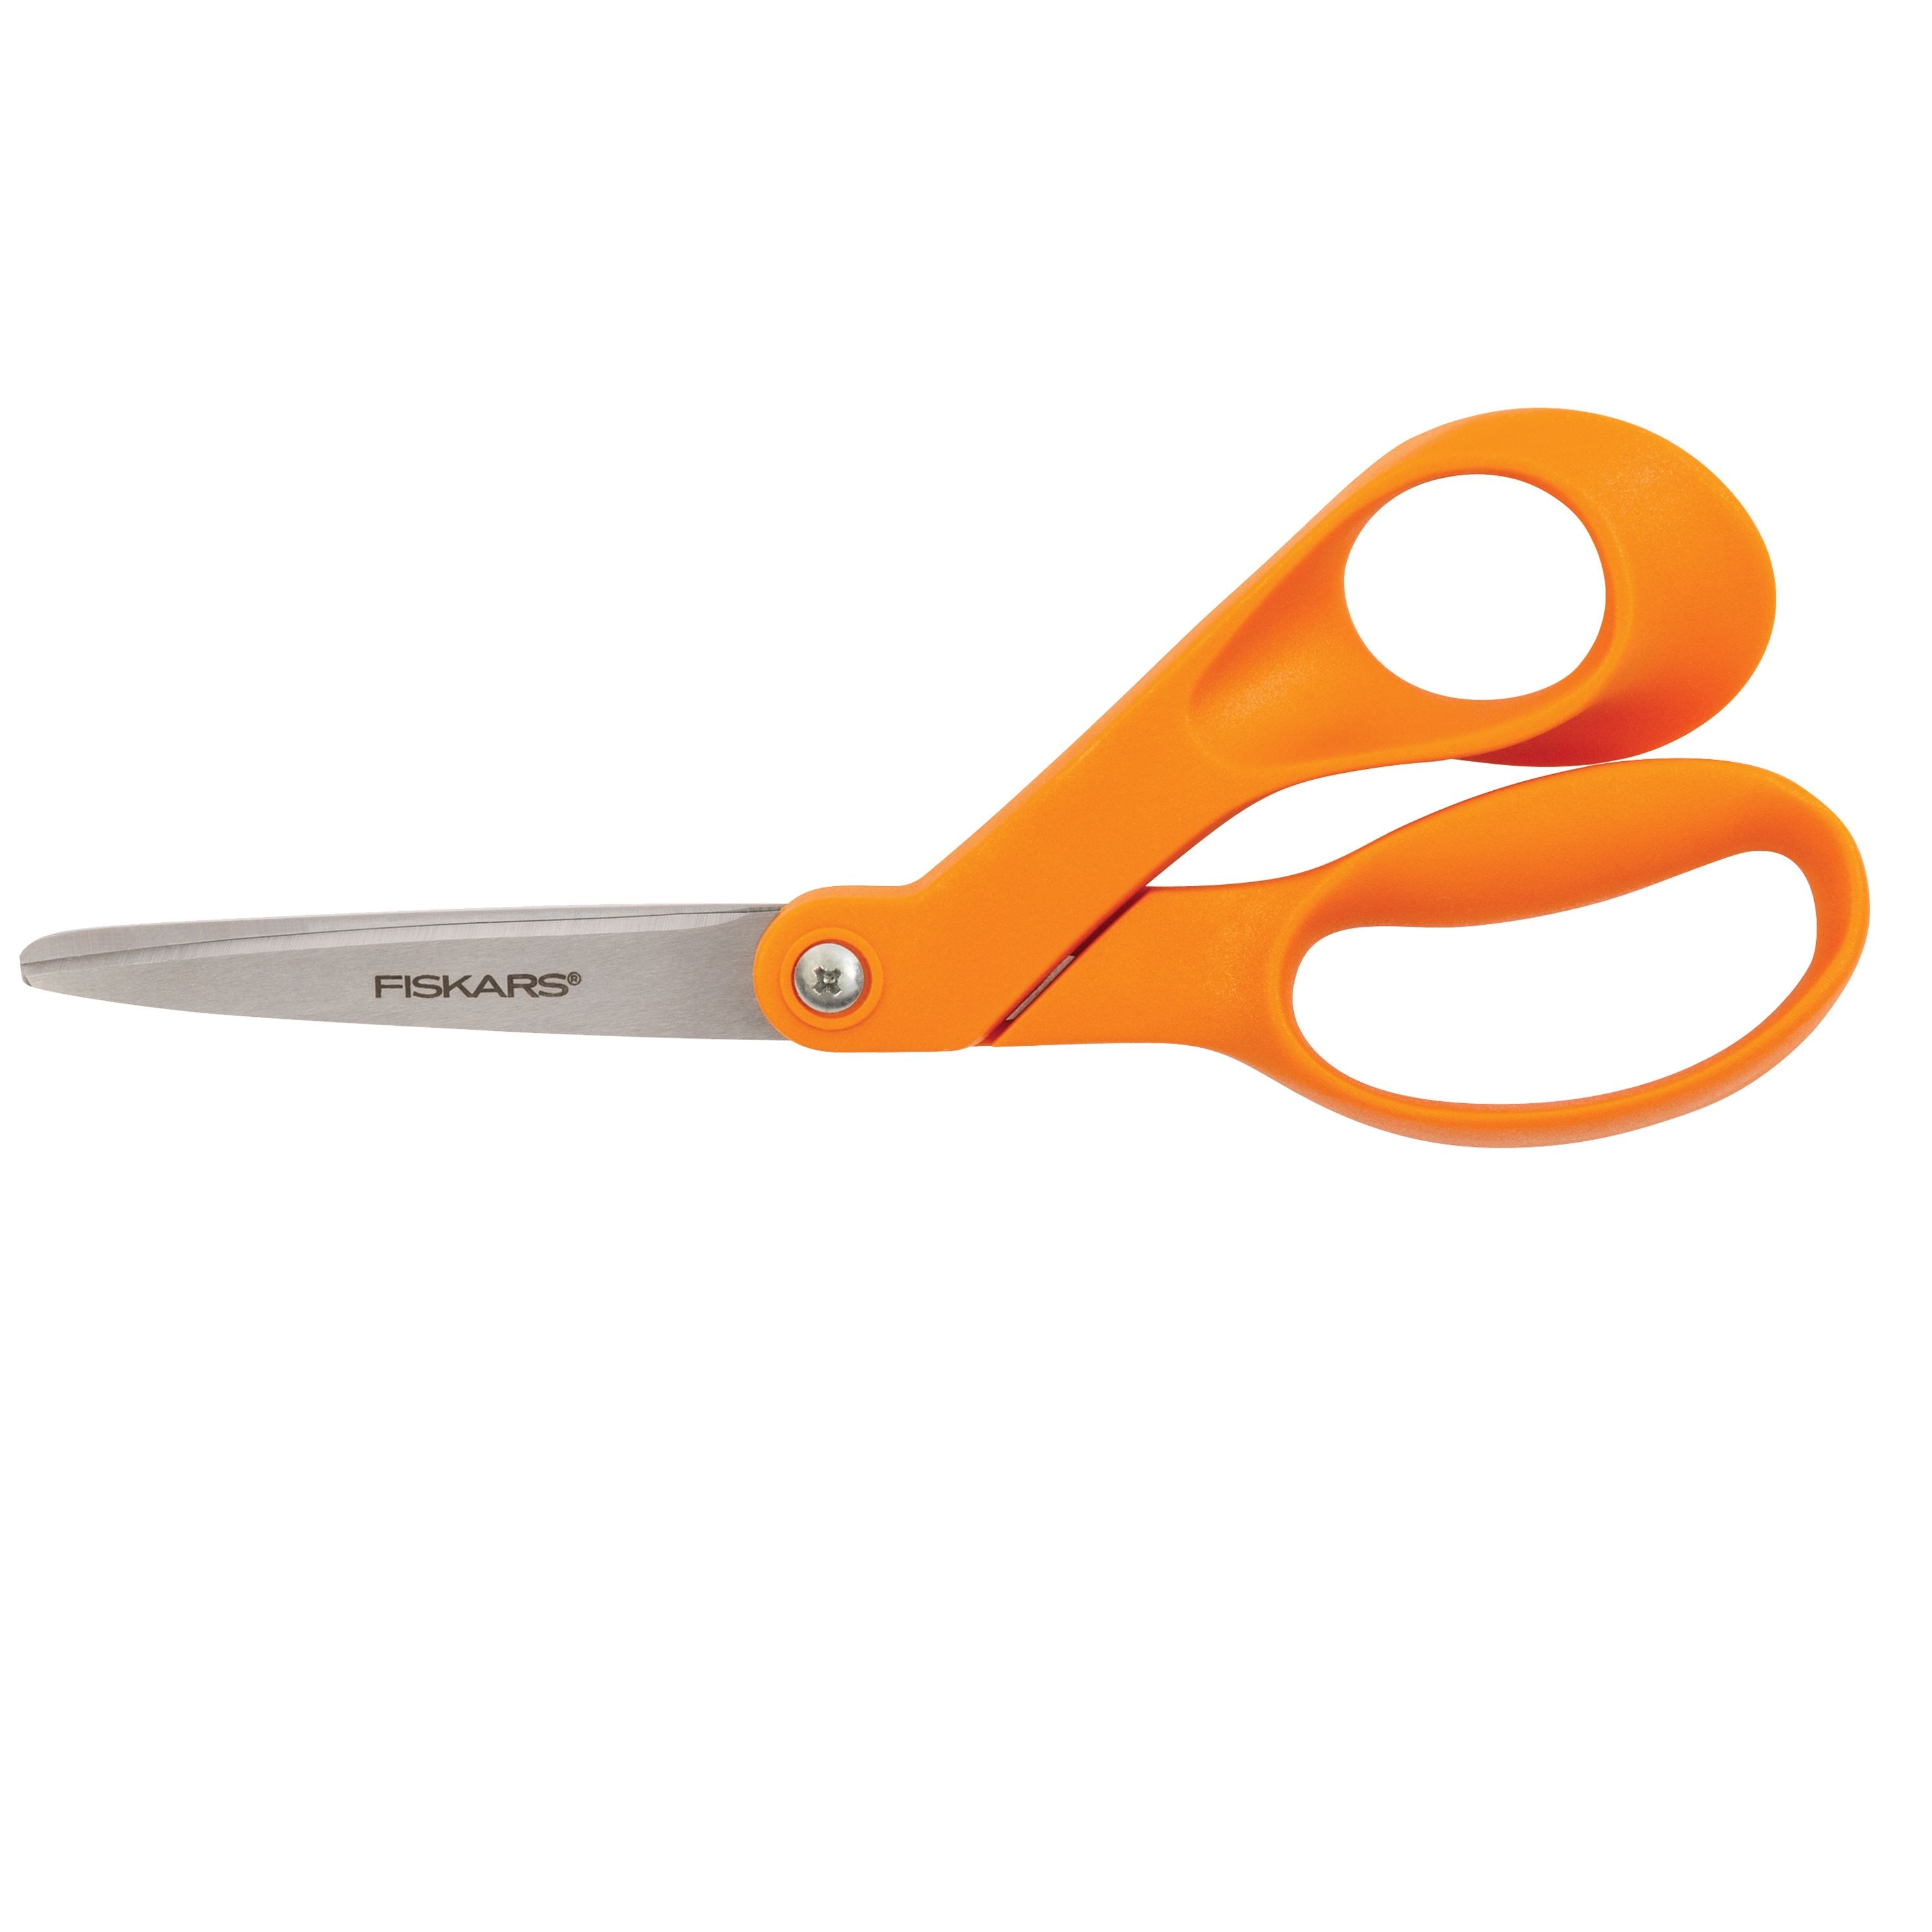  Fiskars Original Orange Handled Scissors